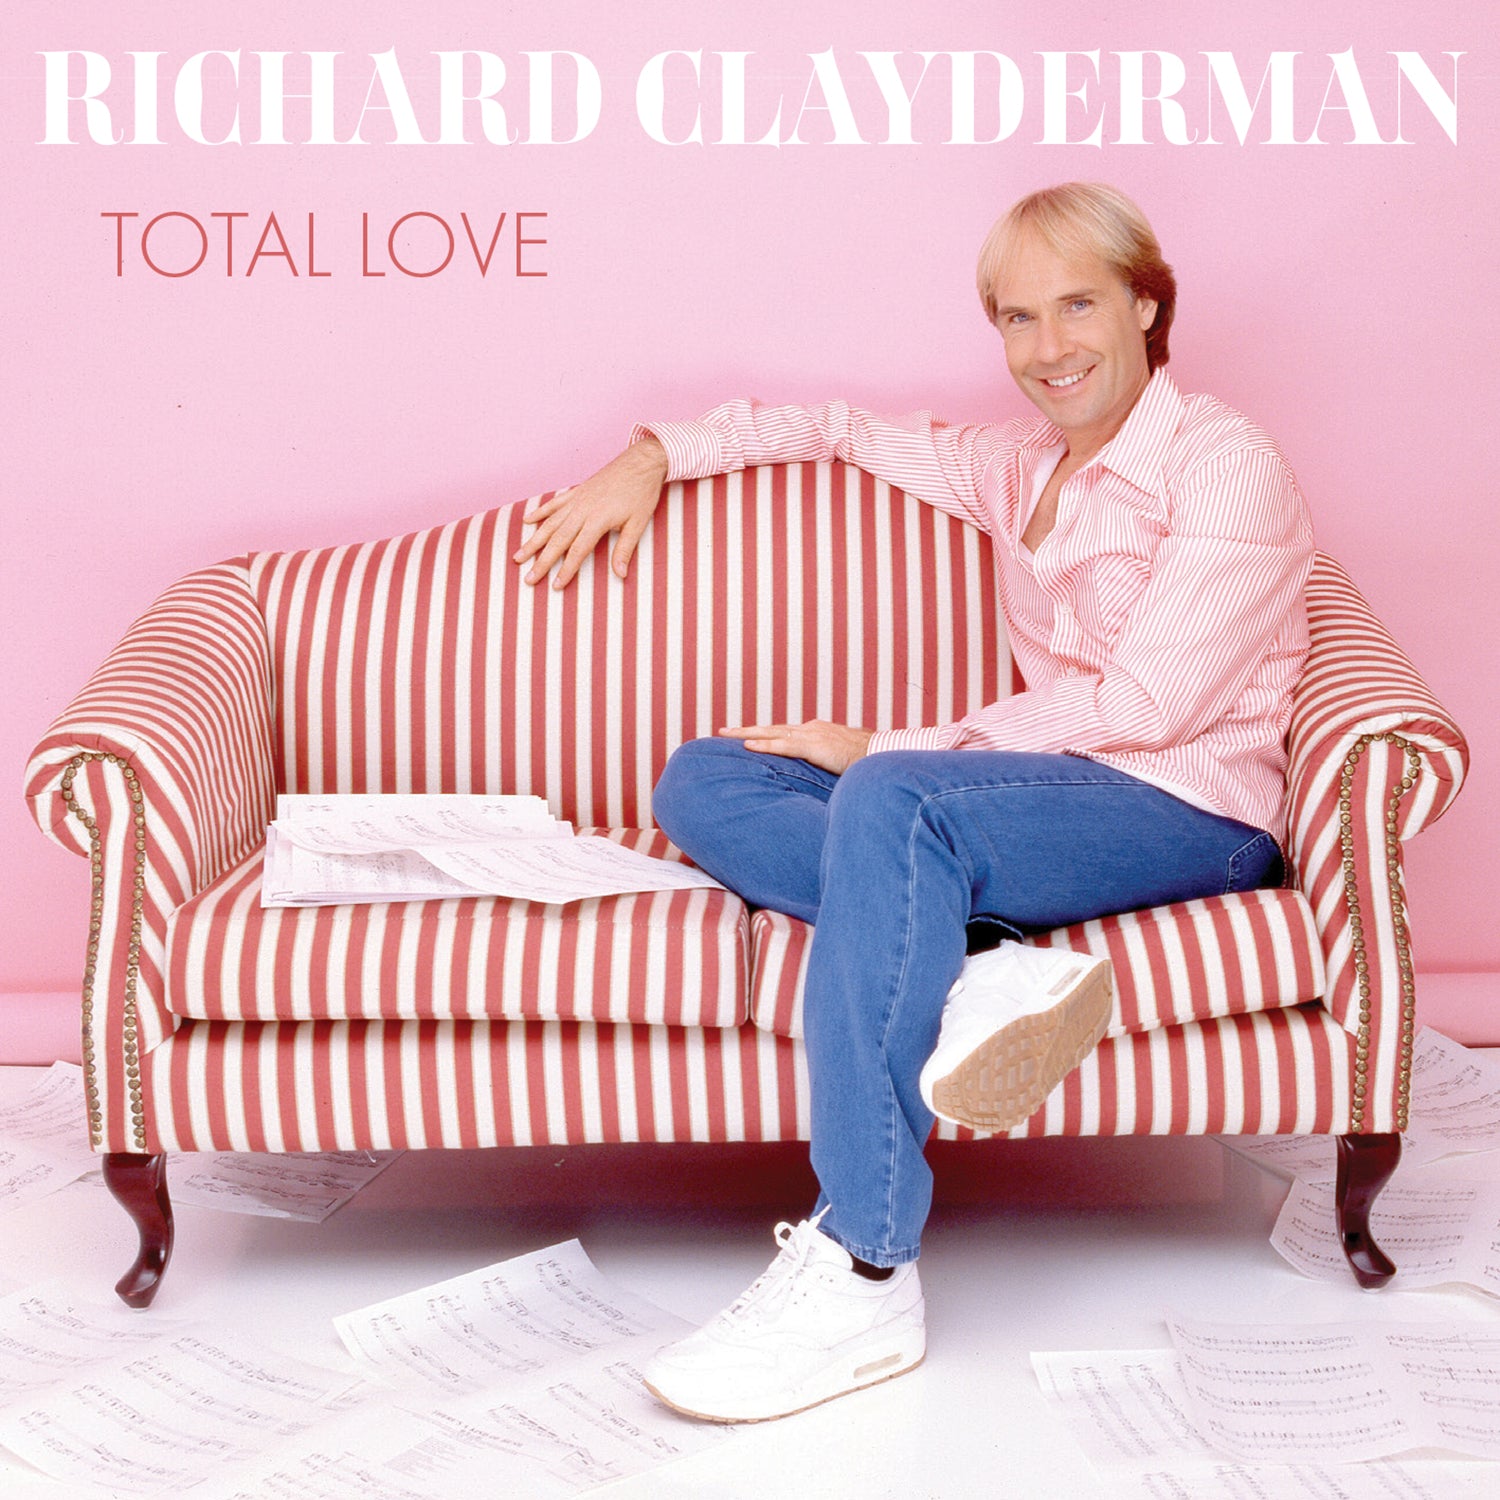 RICHARD CLAYDERMAN - TOTAL LOVE